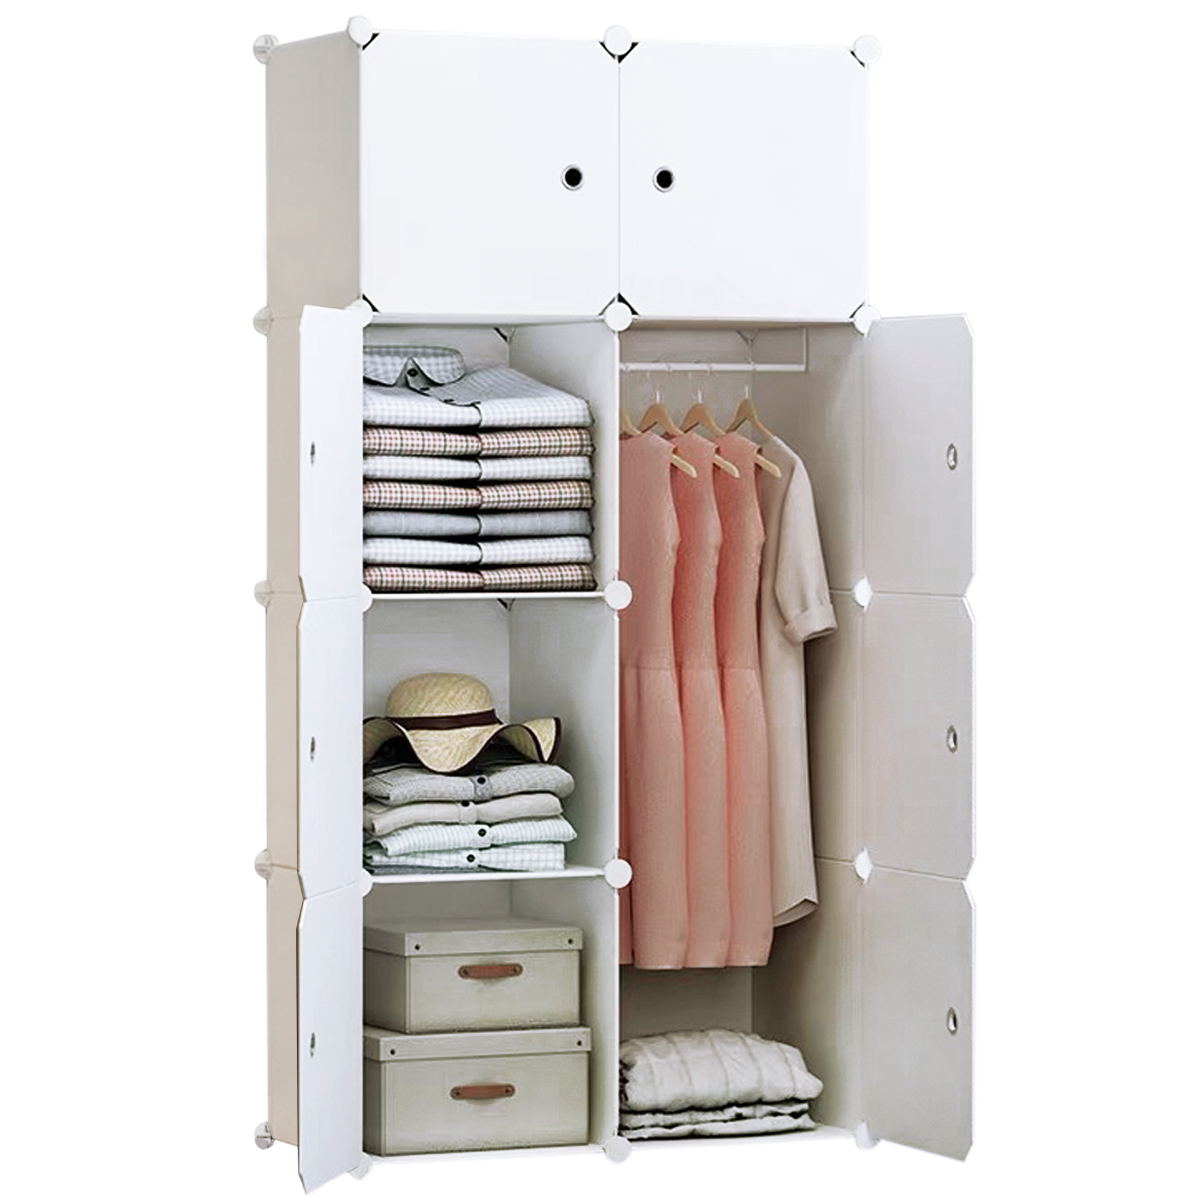 8-Cube Portable Closet, Plastic Wardrobe with Doors & 1 Hangers